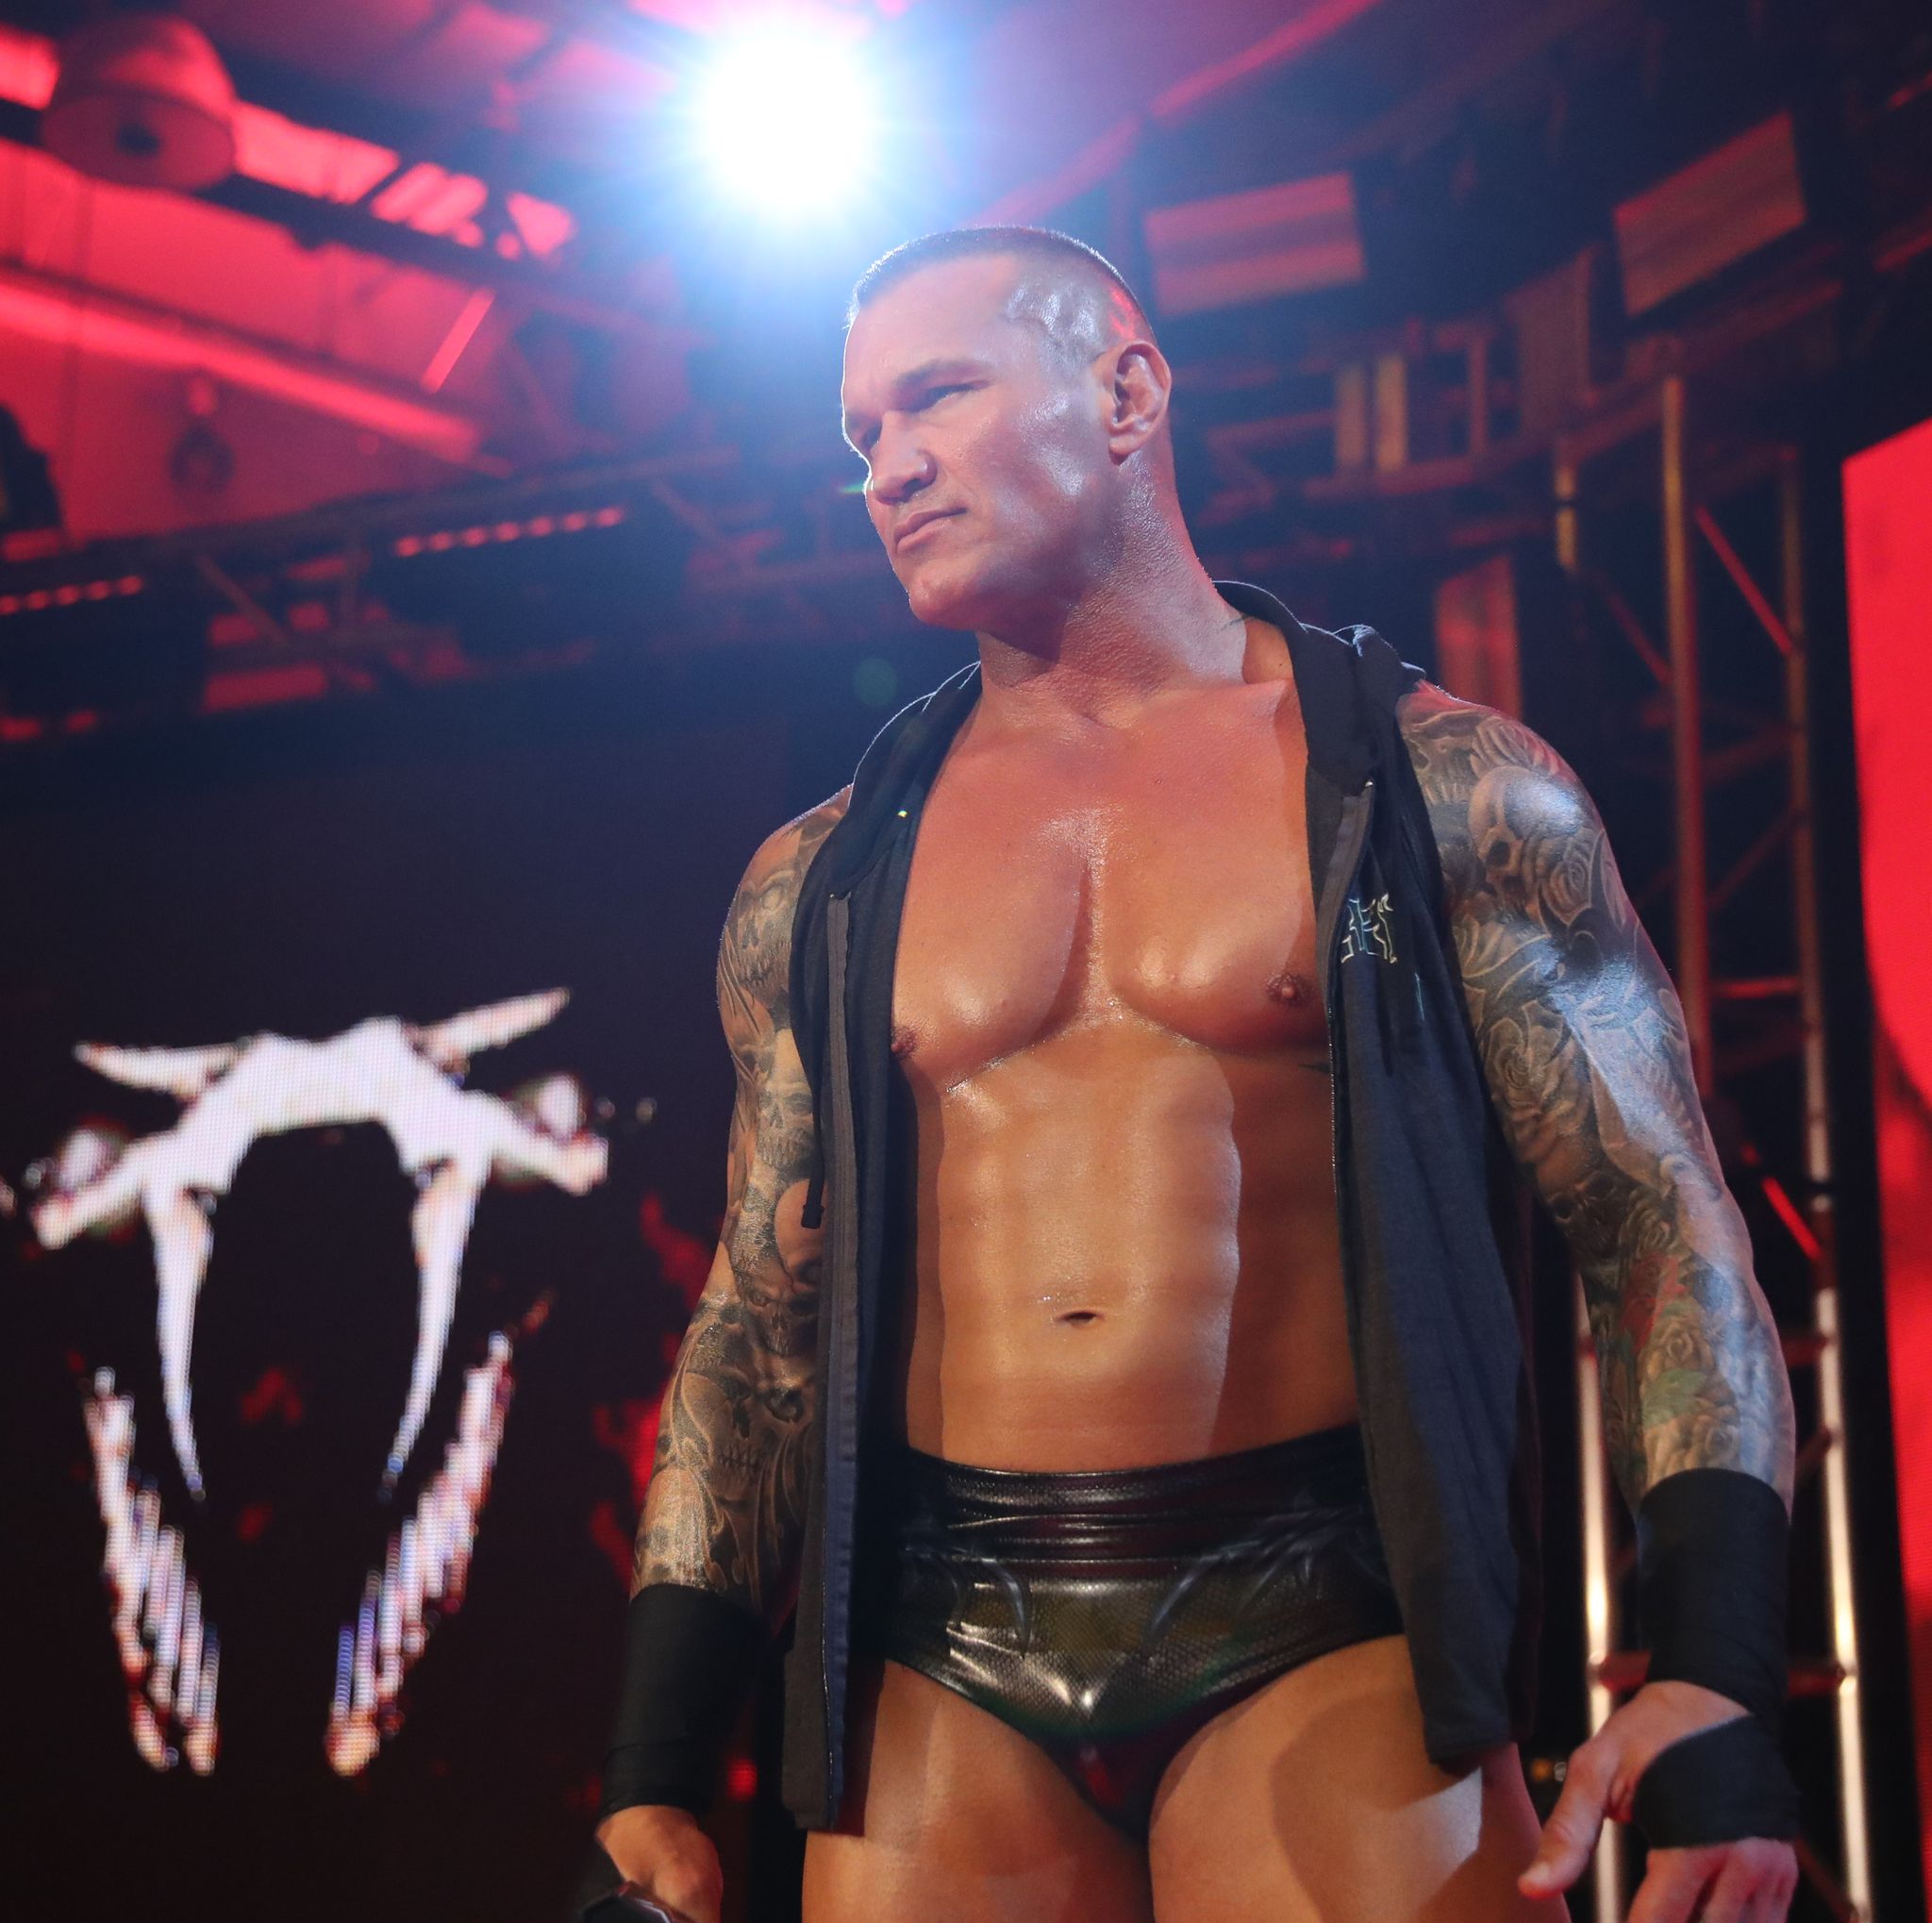 Randy Orton - Wikipedia